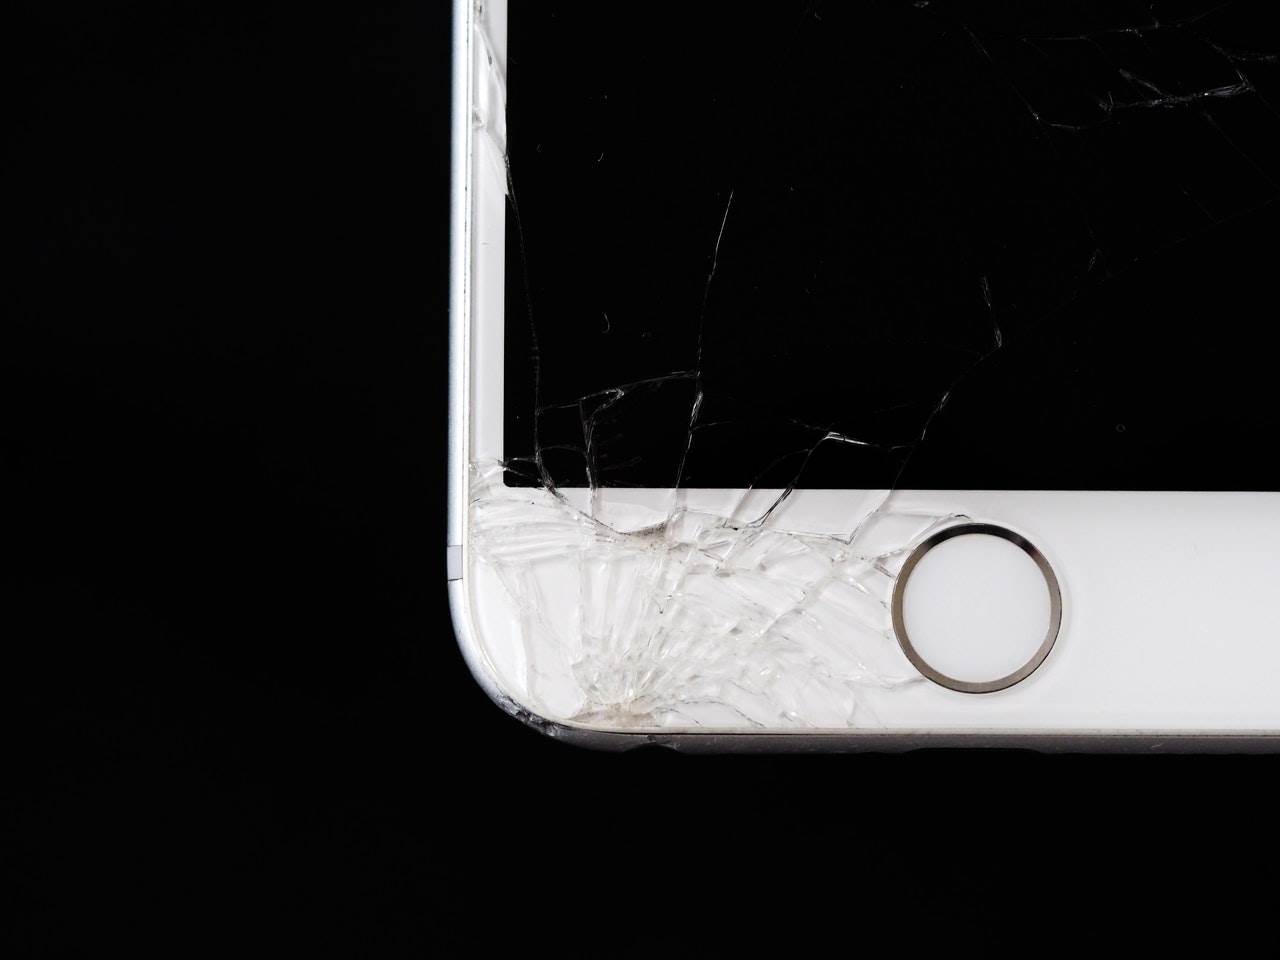  Apple iPhone razbijen (1).jpg 